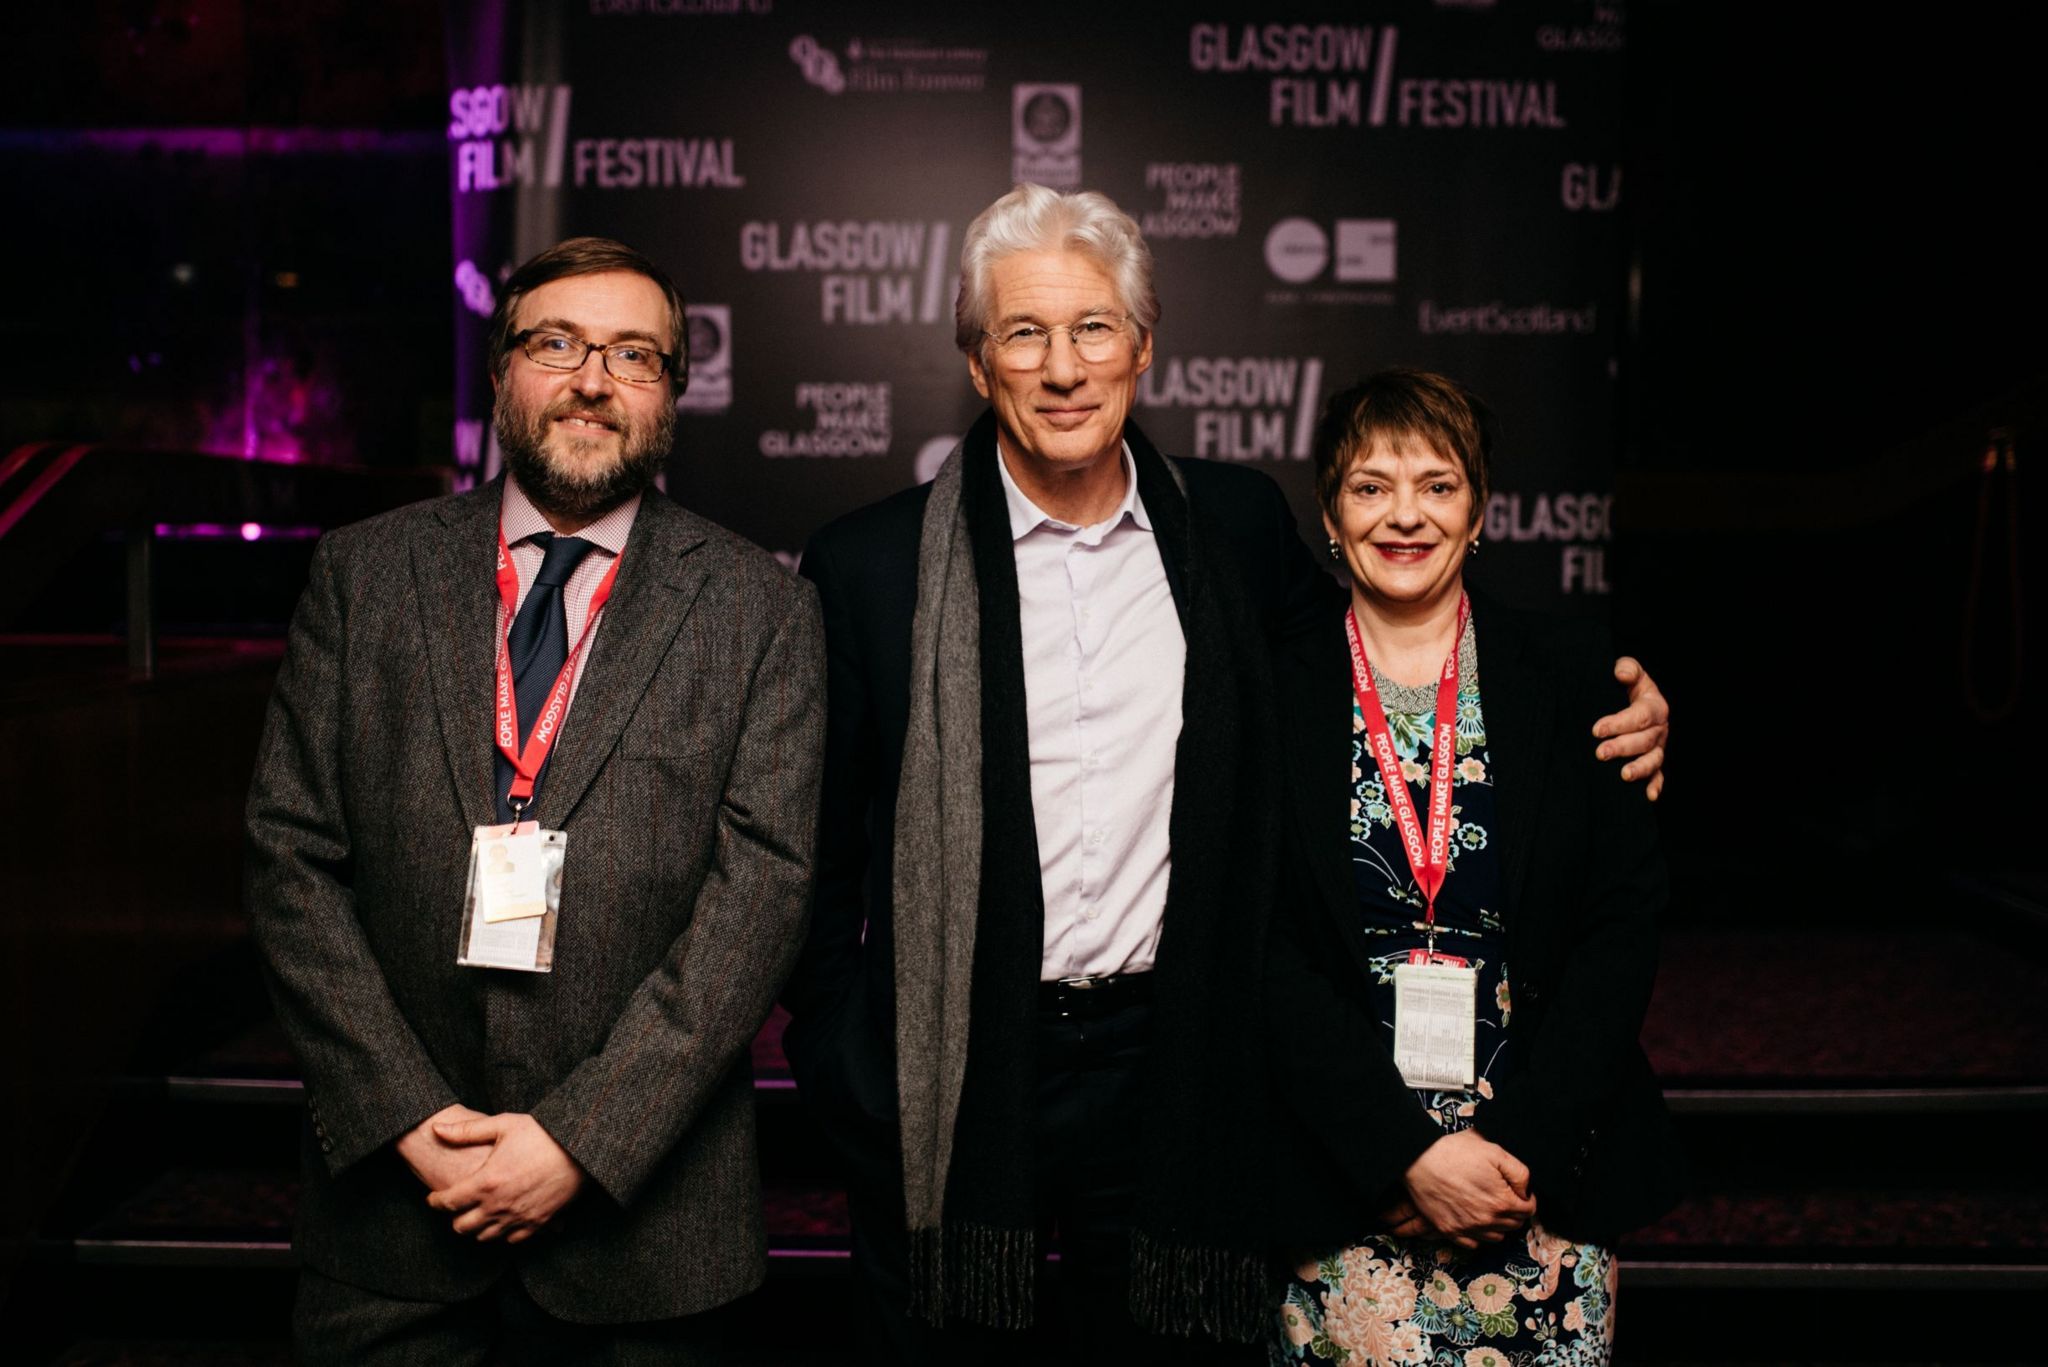 Richard Gere at the 2016 Glasgow Film Festival